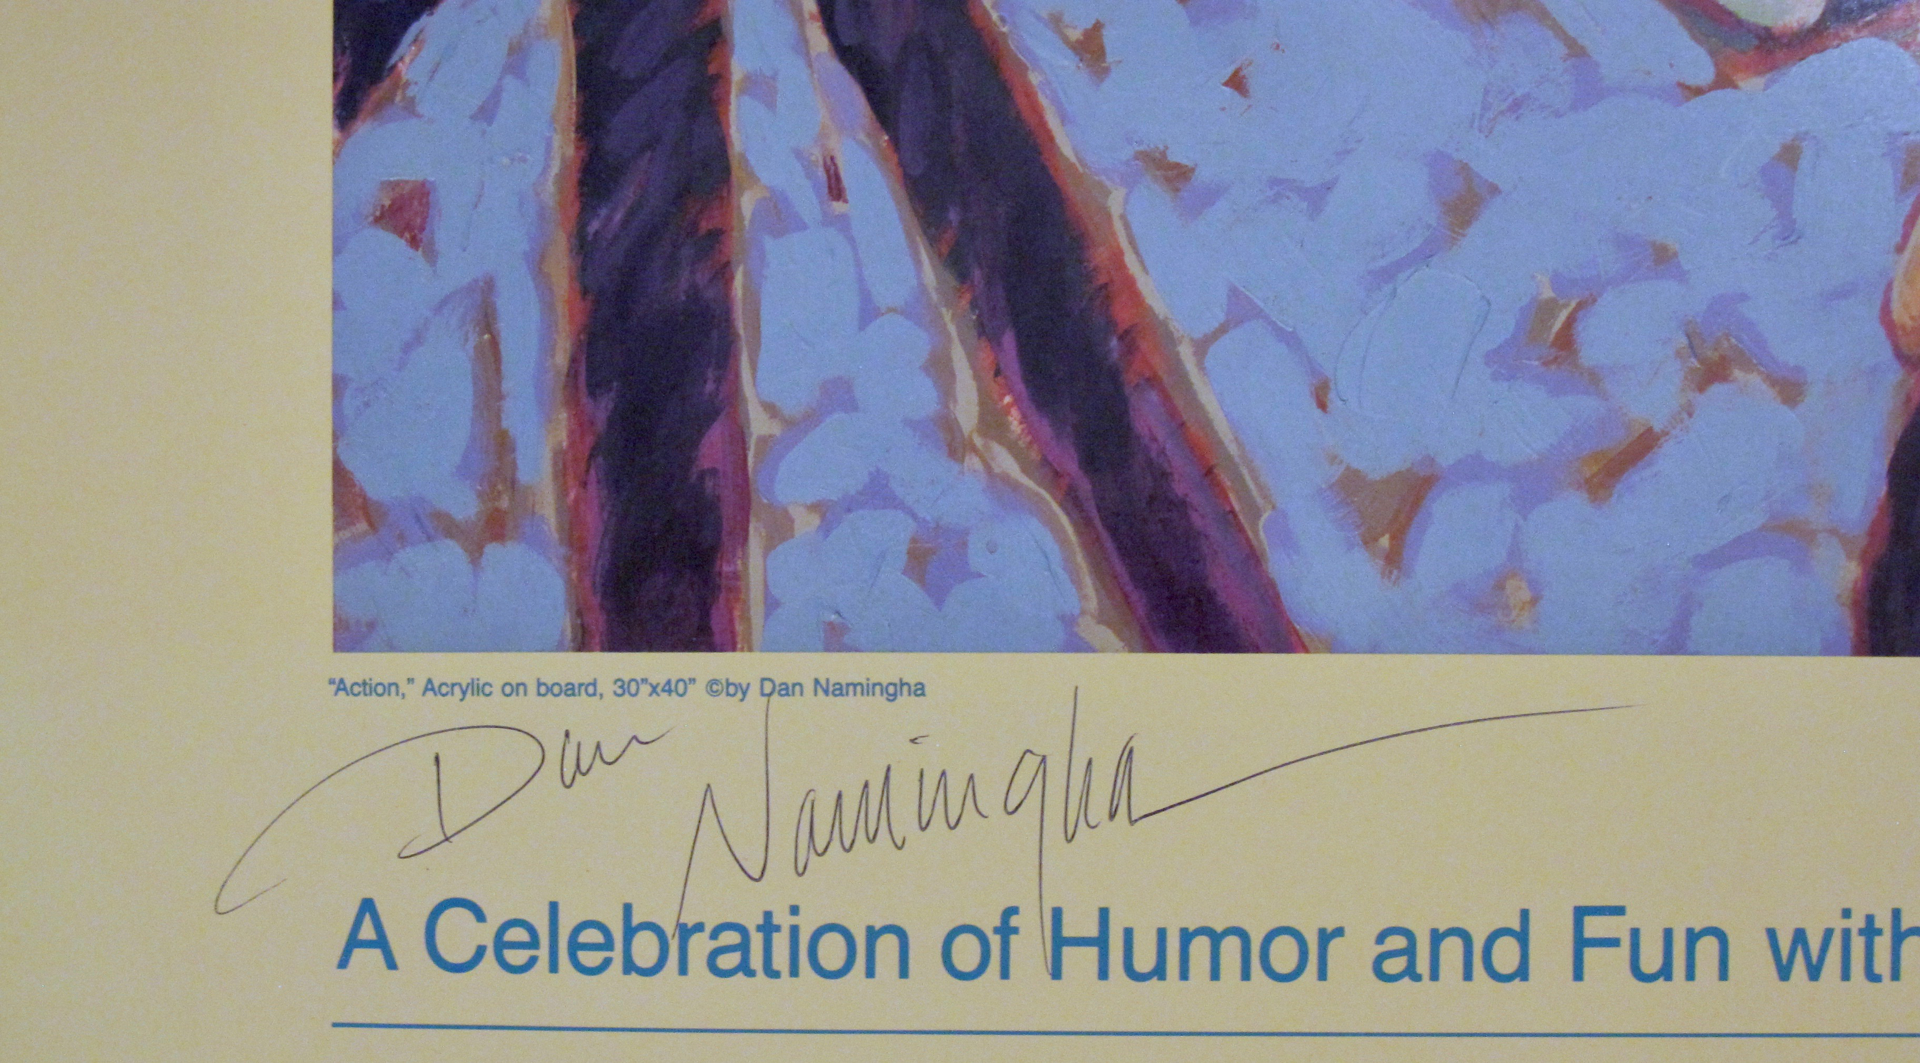 A Celebration of Humor and Fun with Robert Redford and Friends, Dan Namingha Poster by Dan Namingha